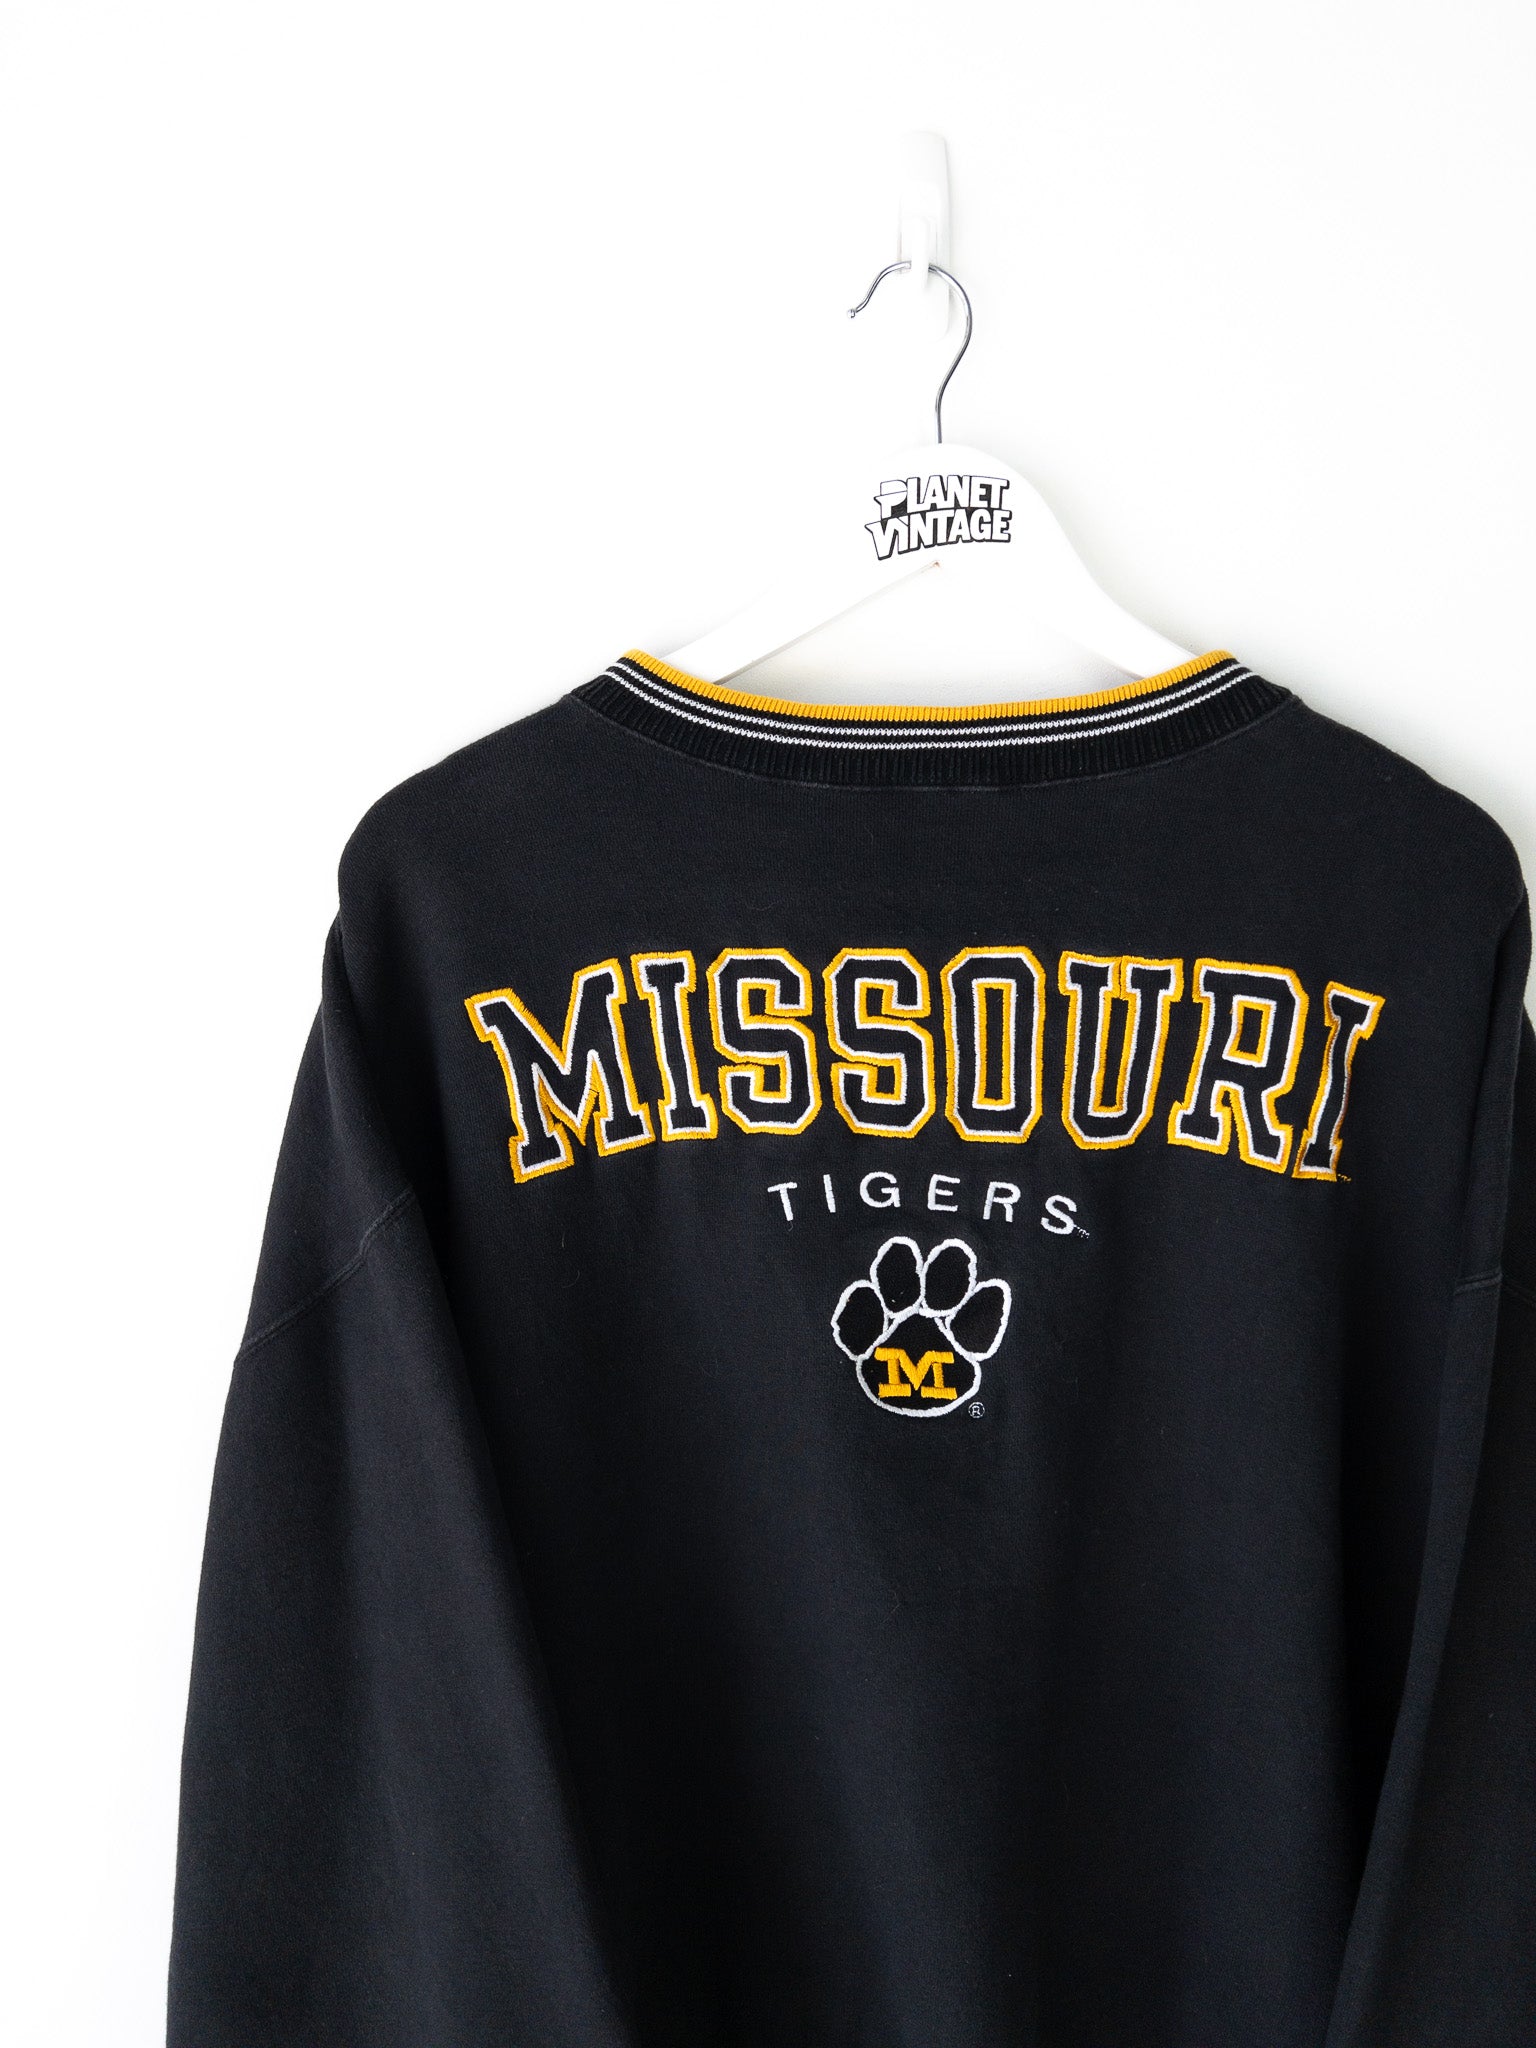 Vintage Missouri Tigers Sweatshirt (XL)